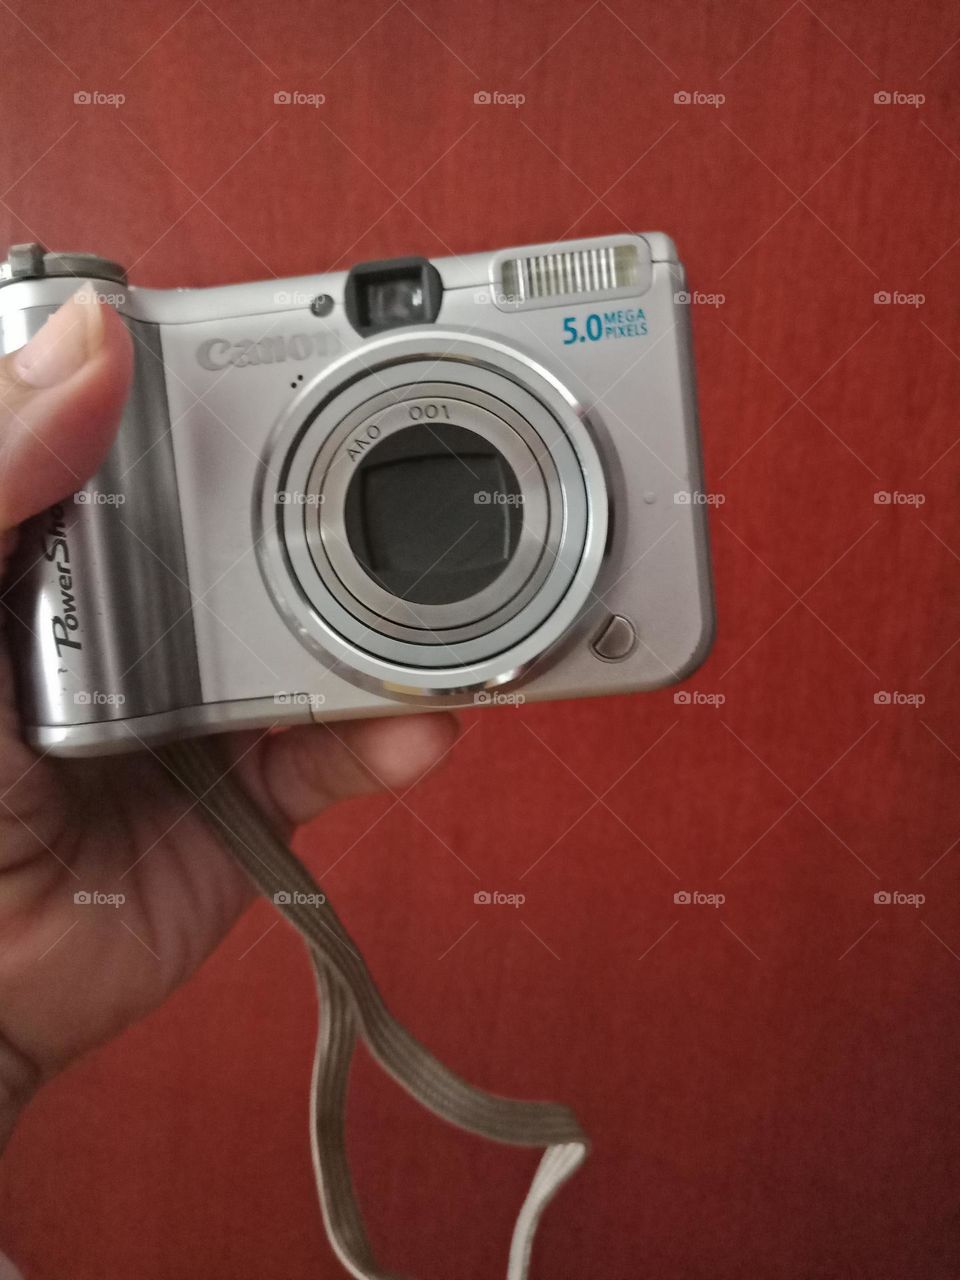 my first digital camera